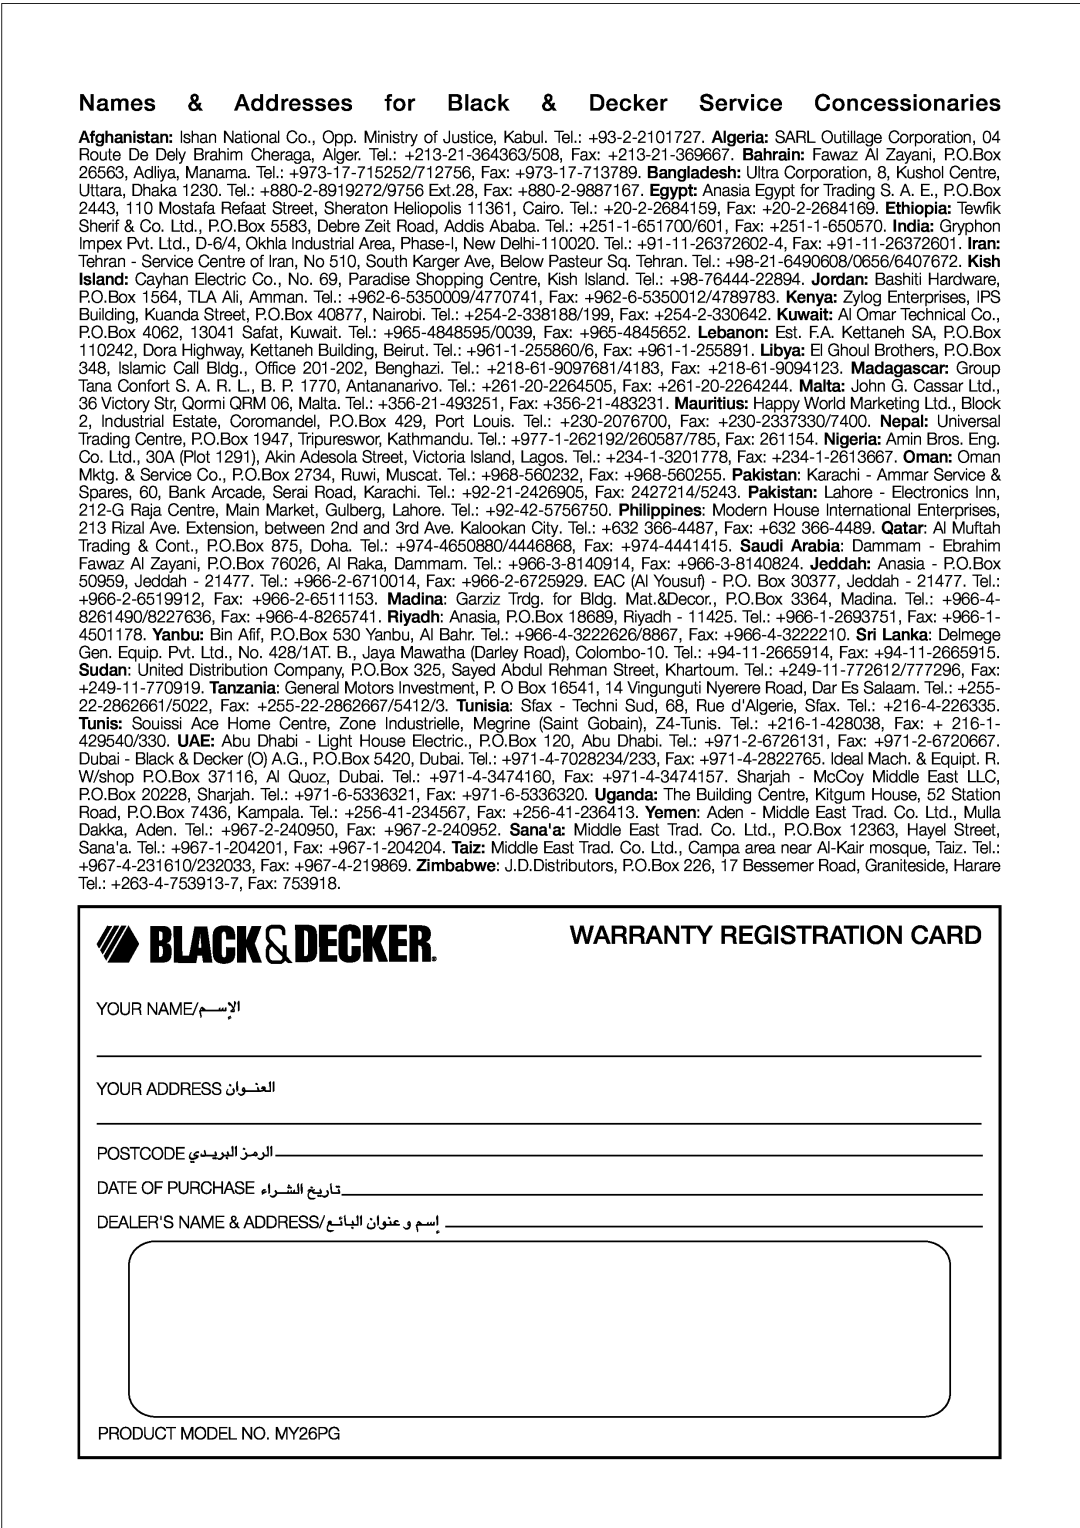 Black & Decker MY26PG manual Warranty Registration Card 